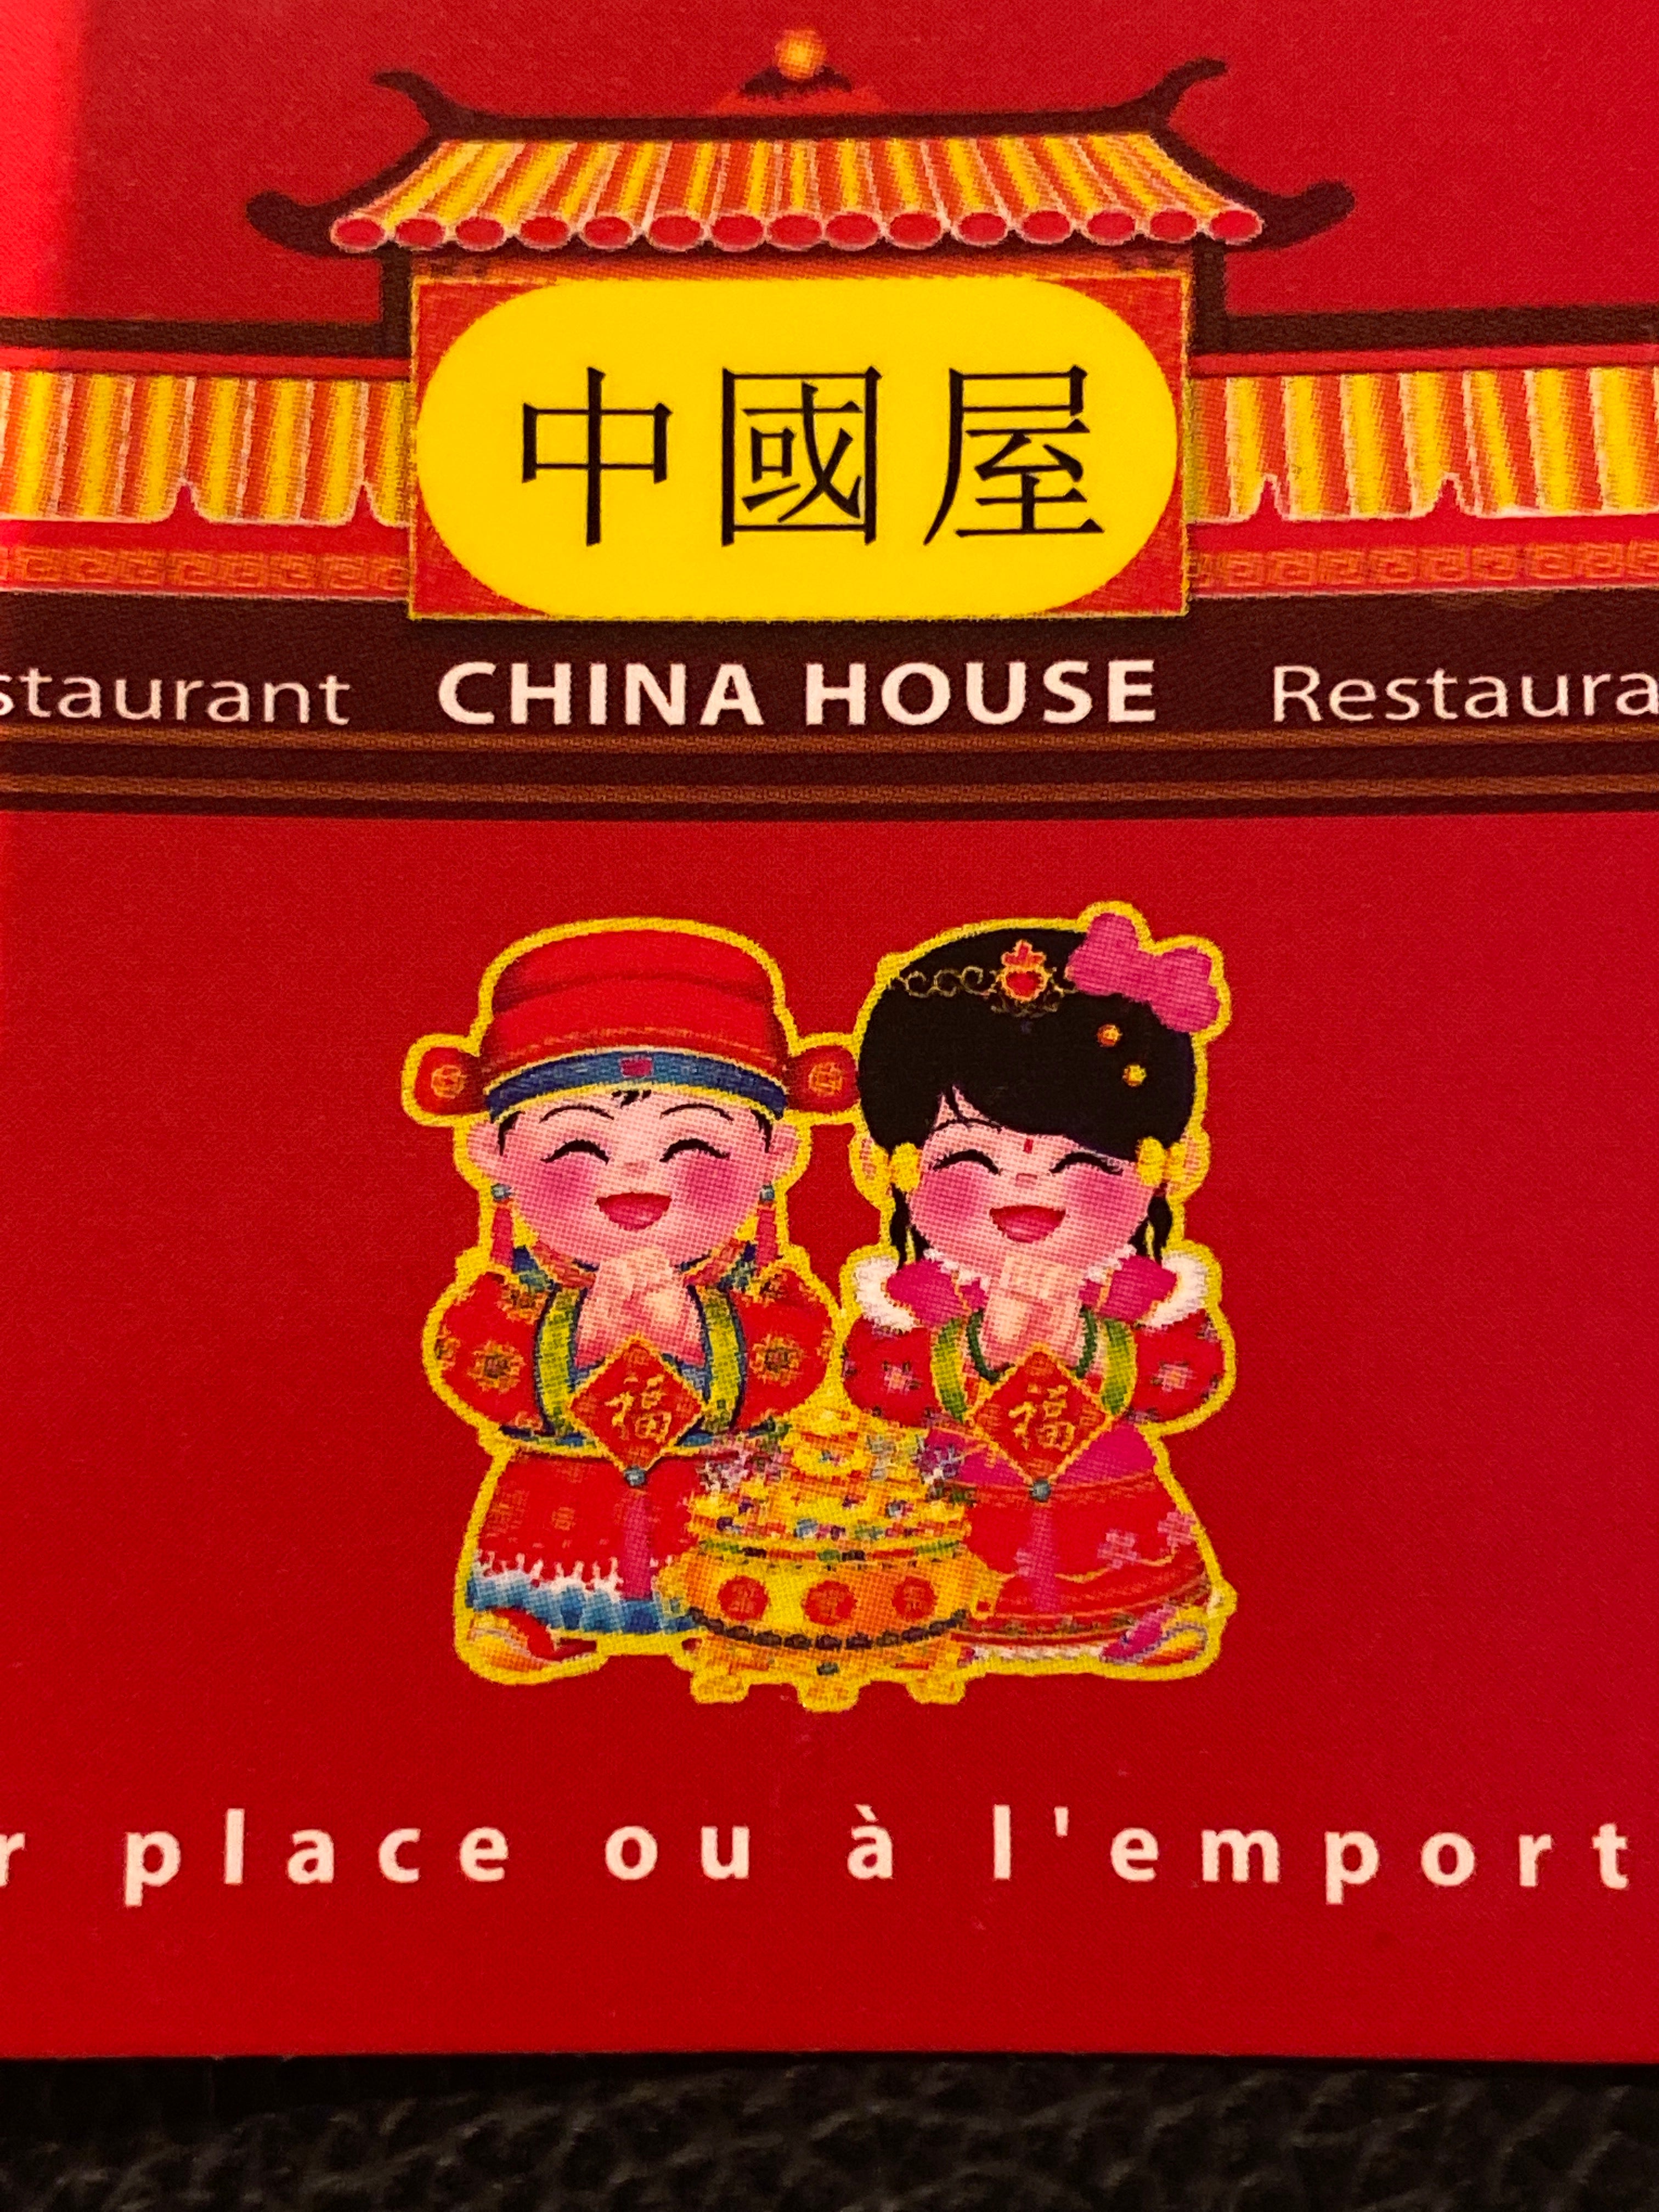 China house